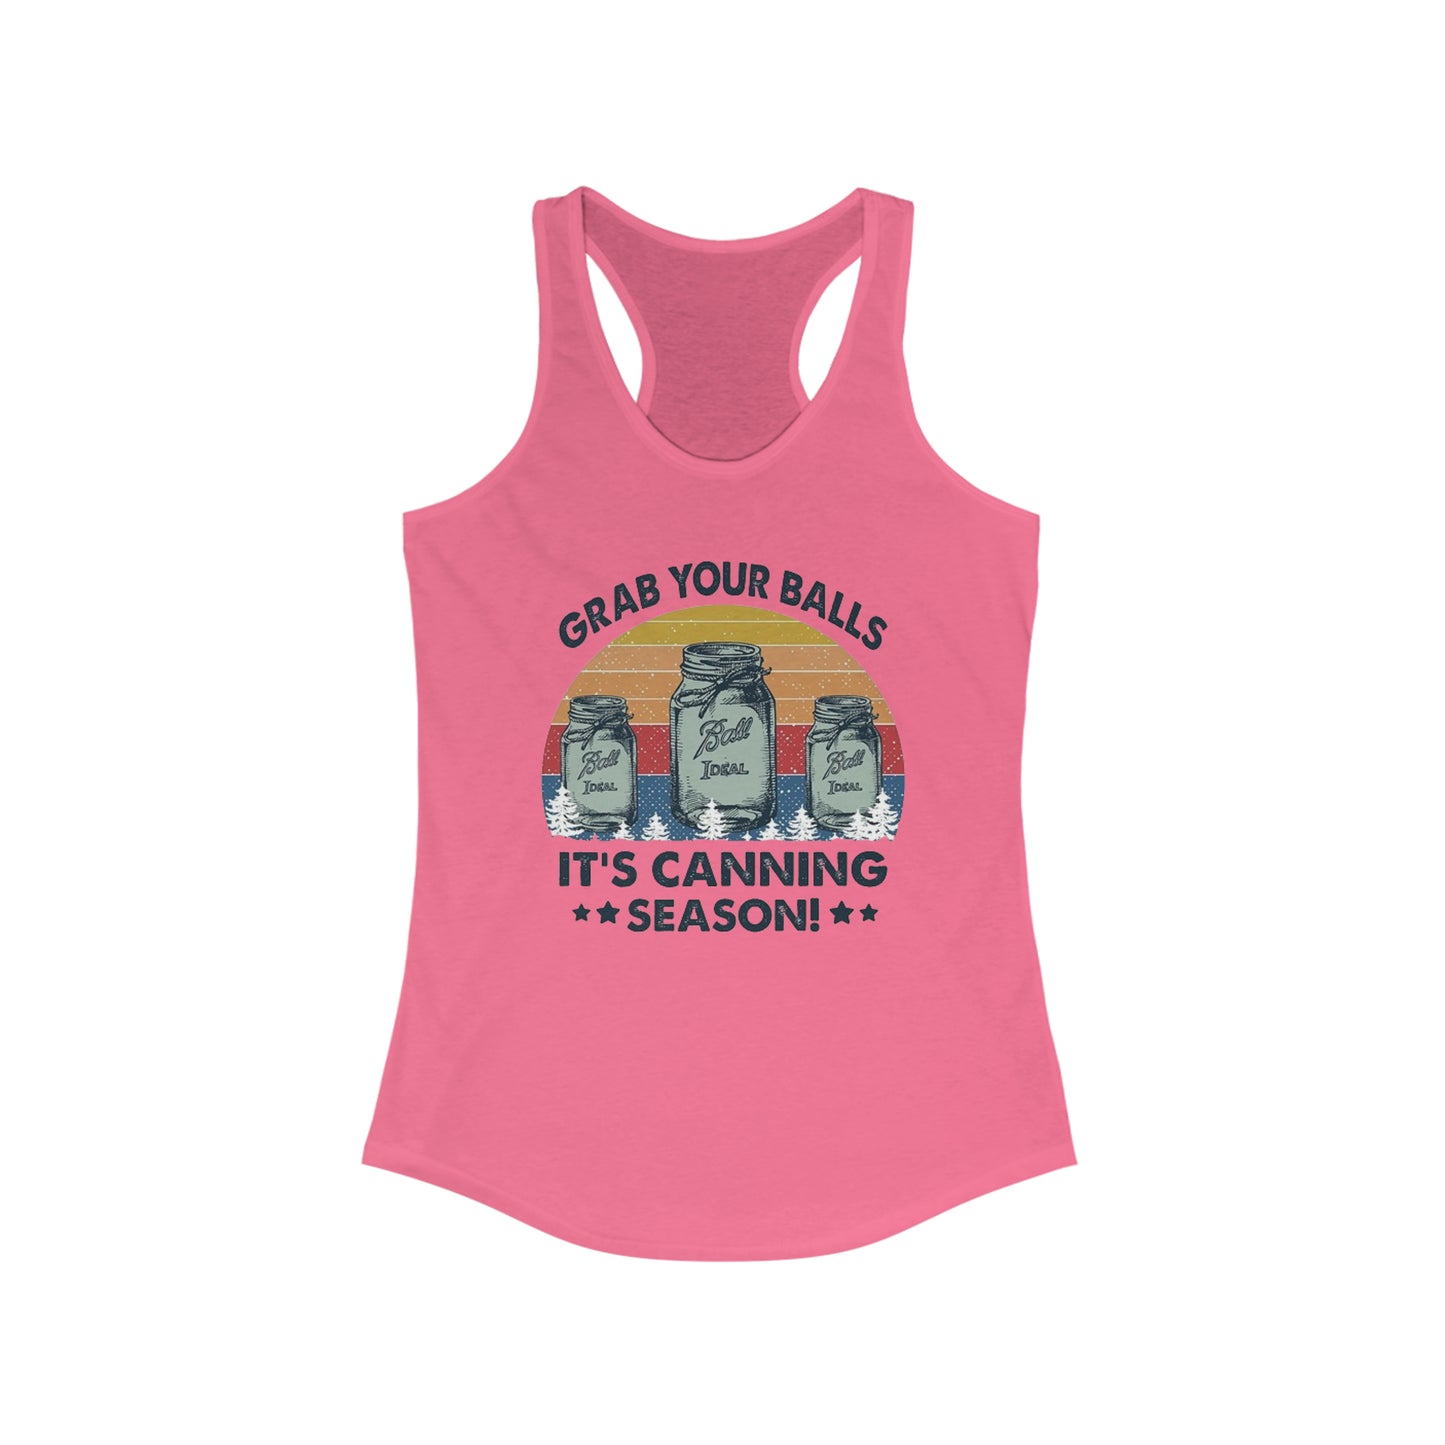 Grab Your Balls It's Canning Season - Women's Ideal Racerback Tank